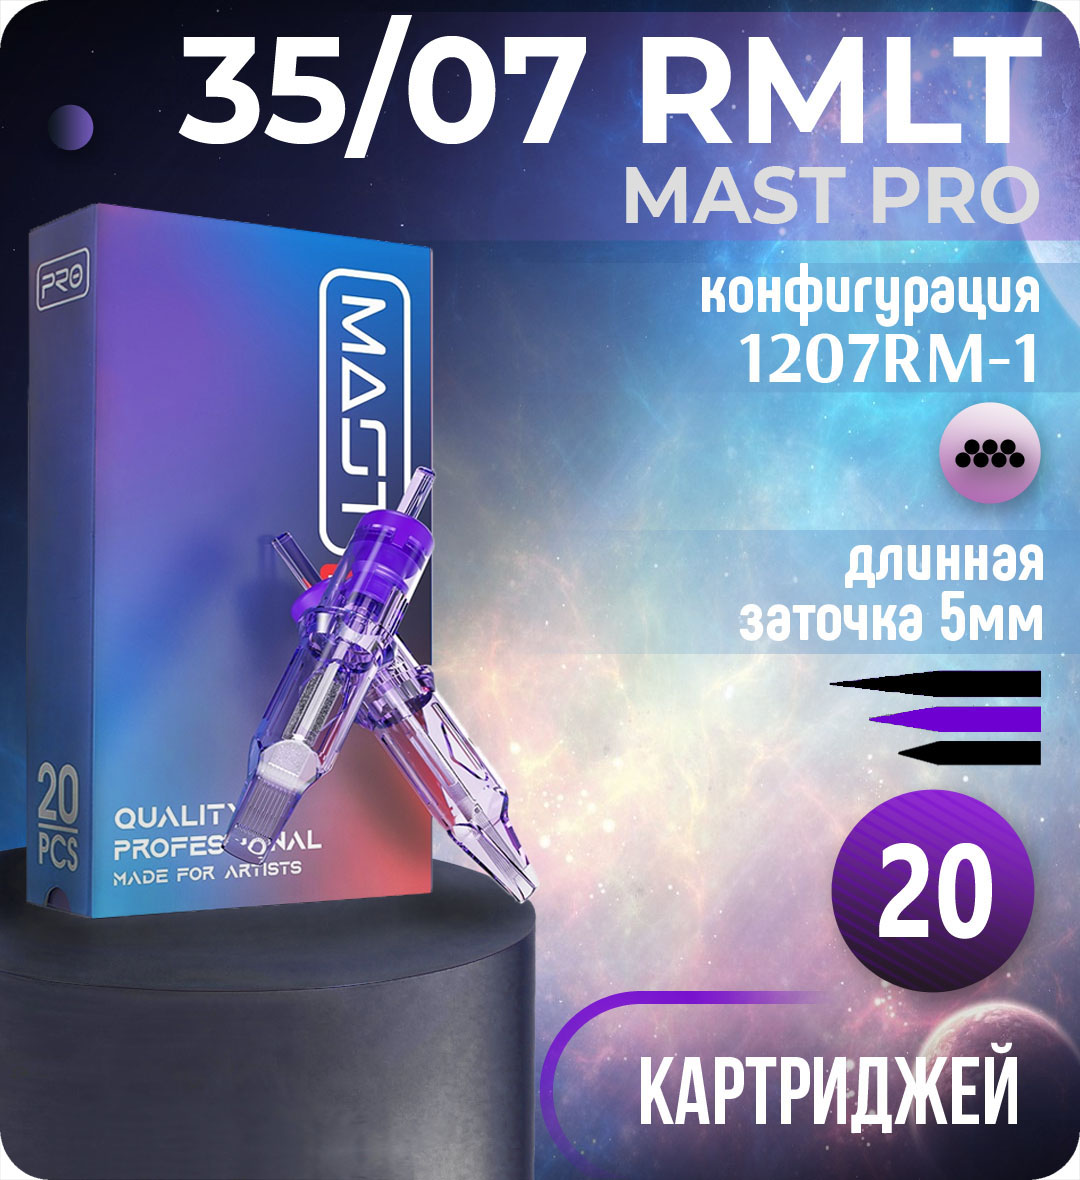 Картриджи Mast Pro 35/07 RMLT (1207RM-1) для тату, перманентного макияжа и татуажа Dragonhawk 20шт